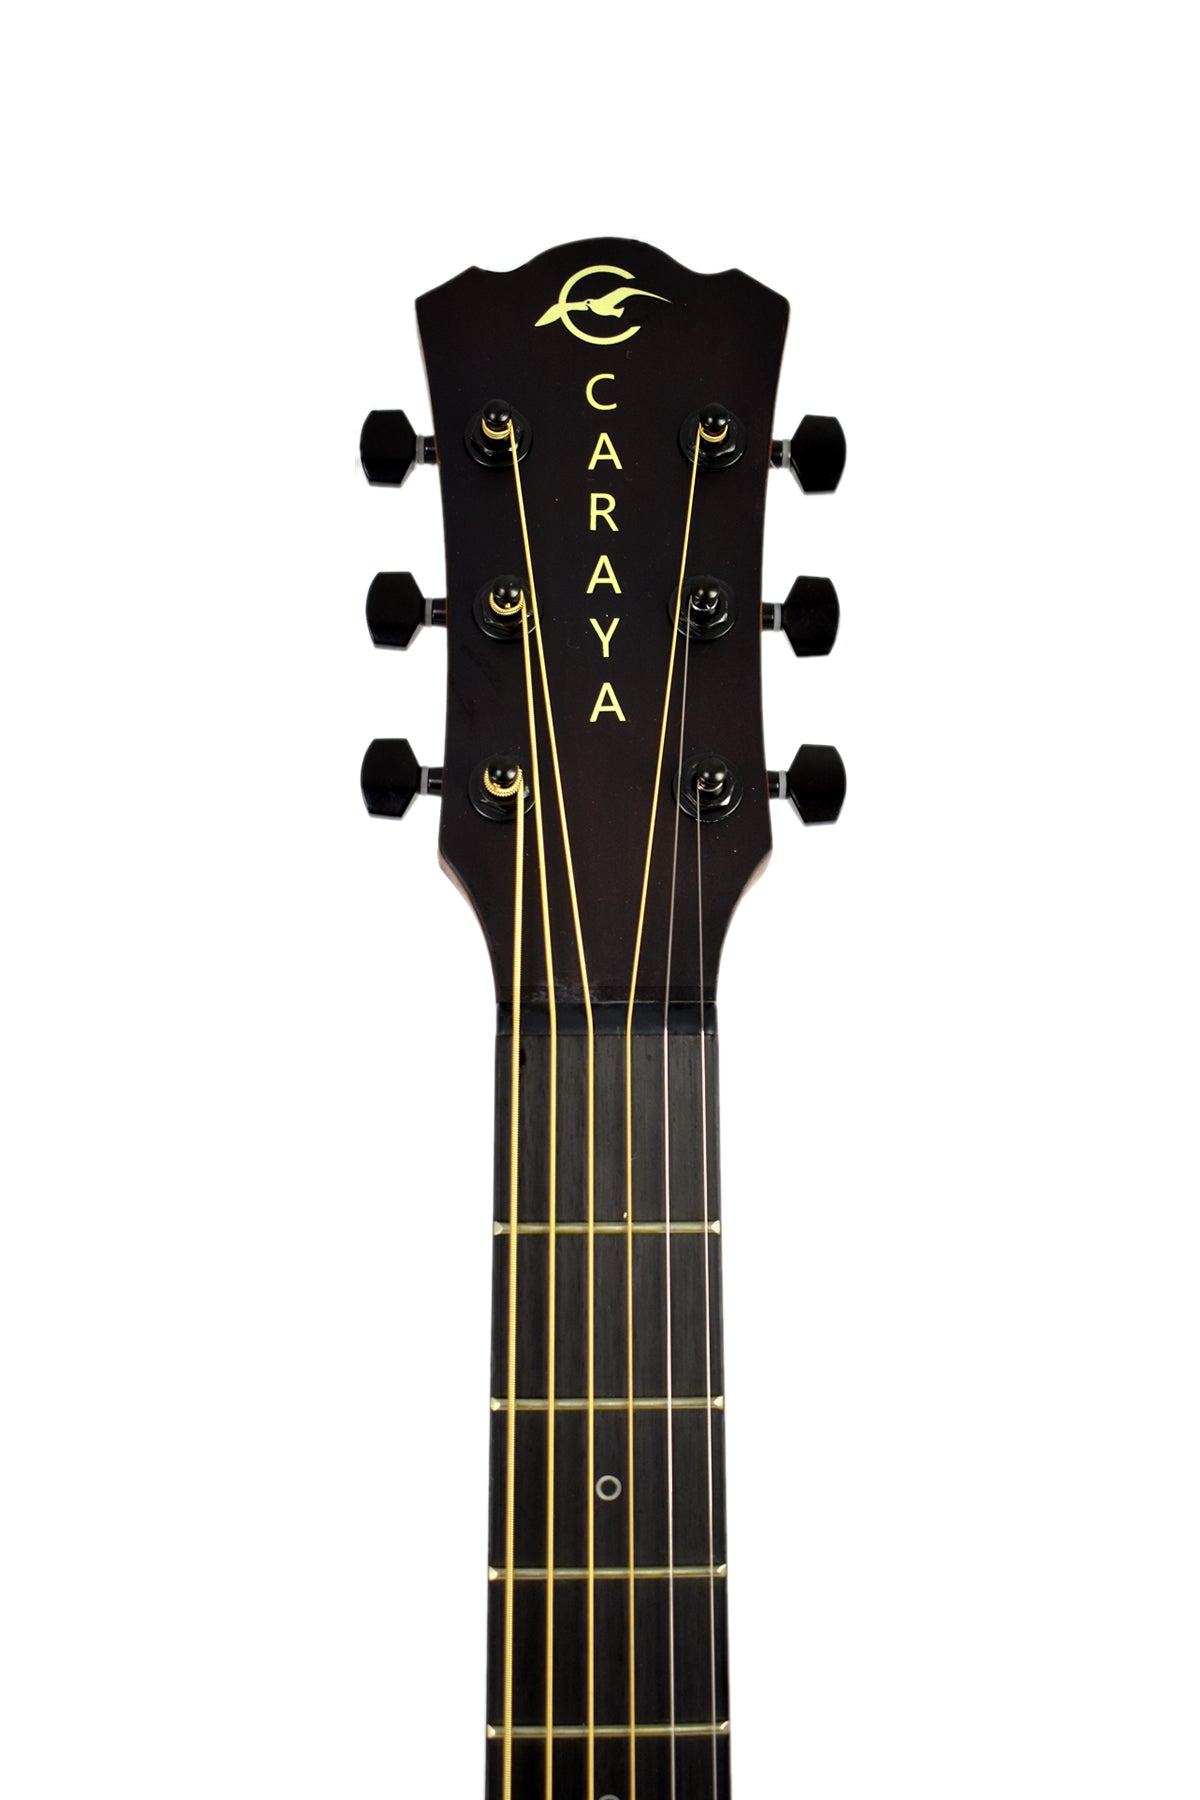 Caraya Safair 40CEQ Series Electro-Acoustic Guitar,All-mahogany+